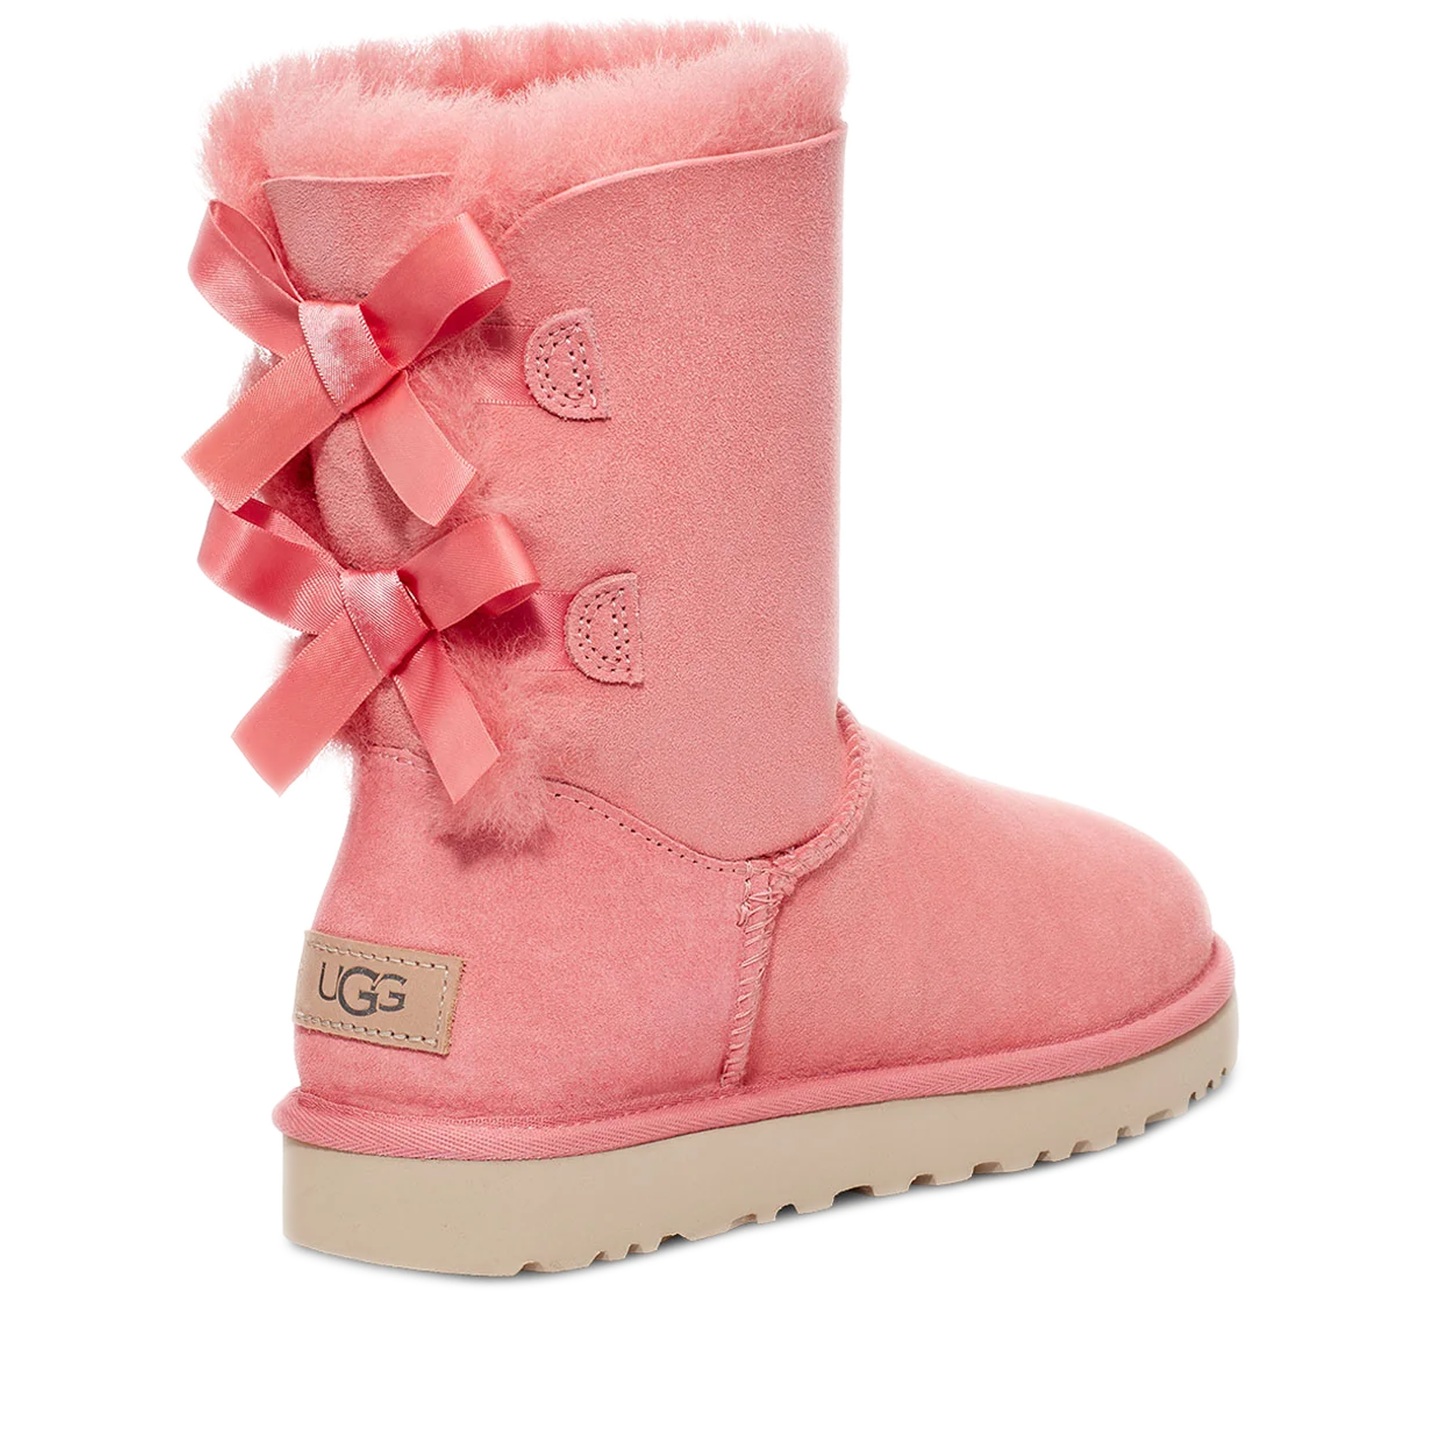 Ugg Kids Bailey Bow II Boot - Pink Blossom